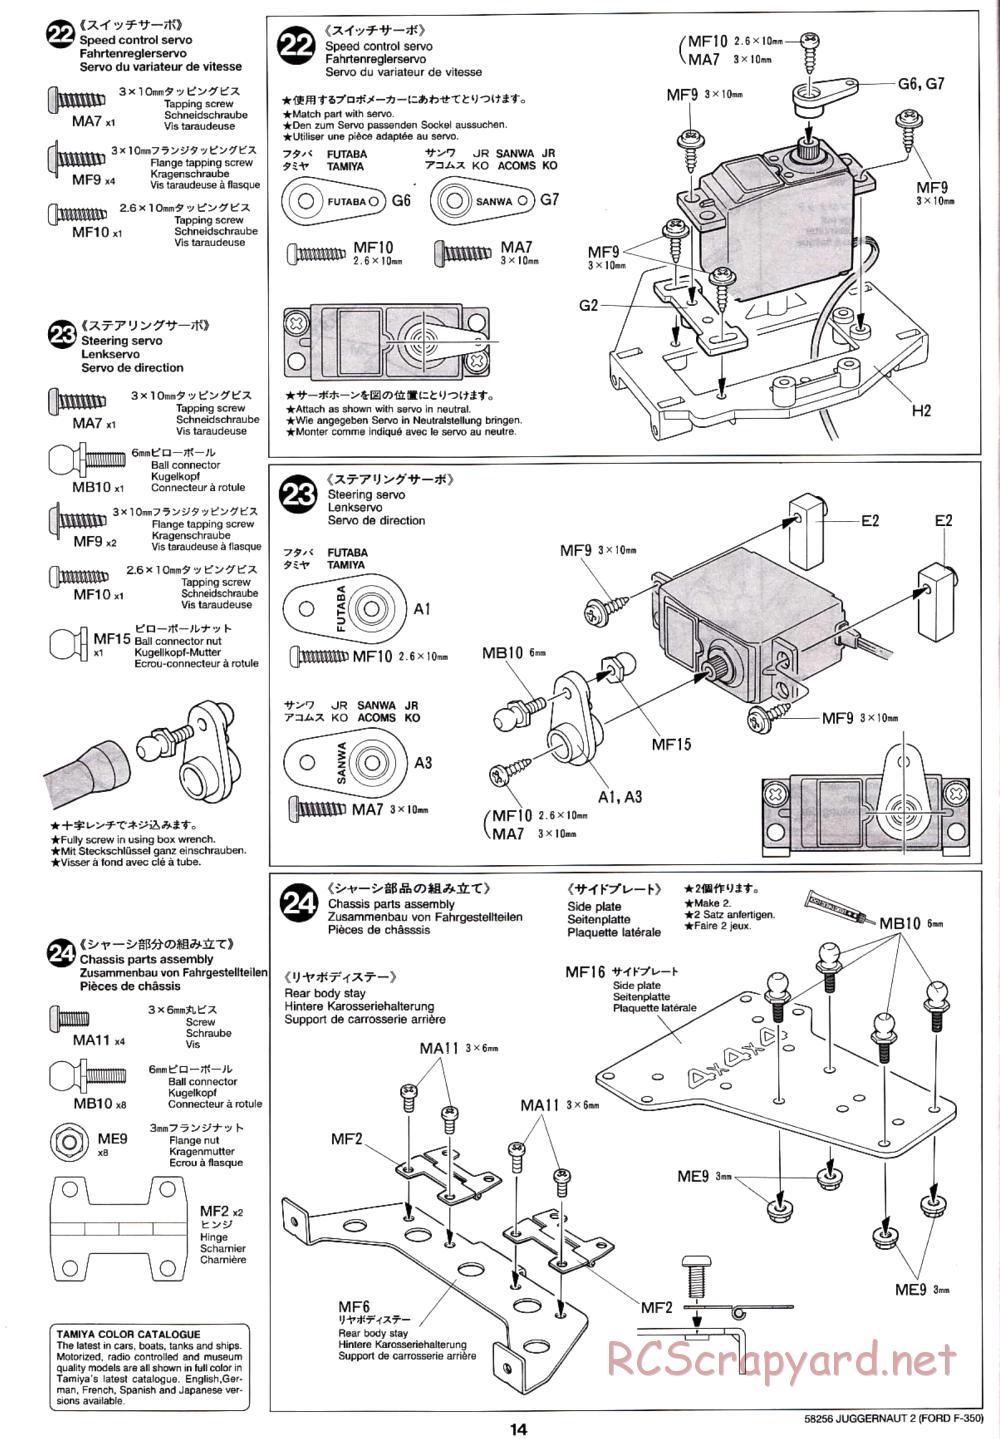 Tamiya - Juggernaut 2 Chassis - Manual - Page 14